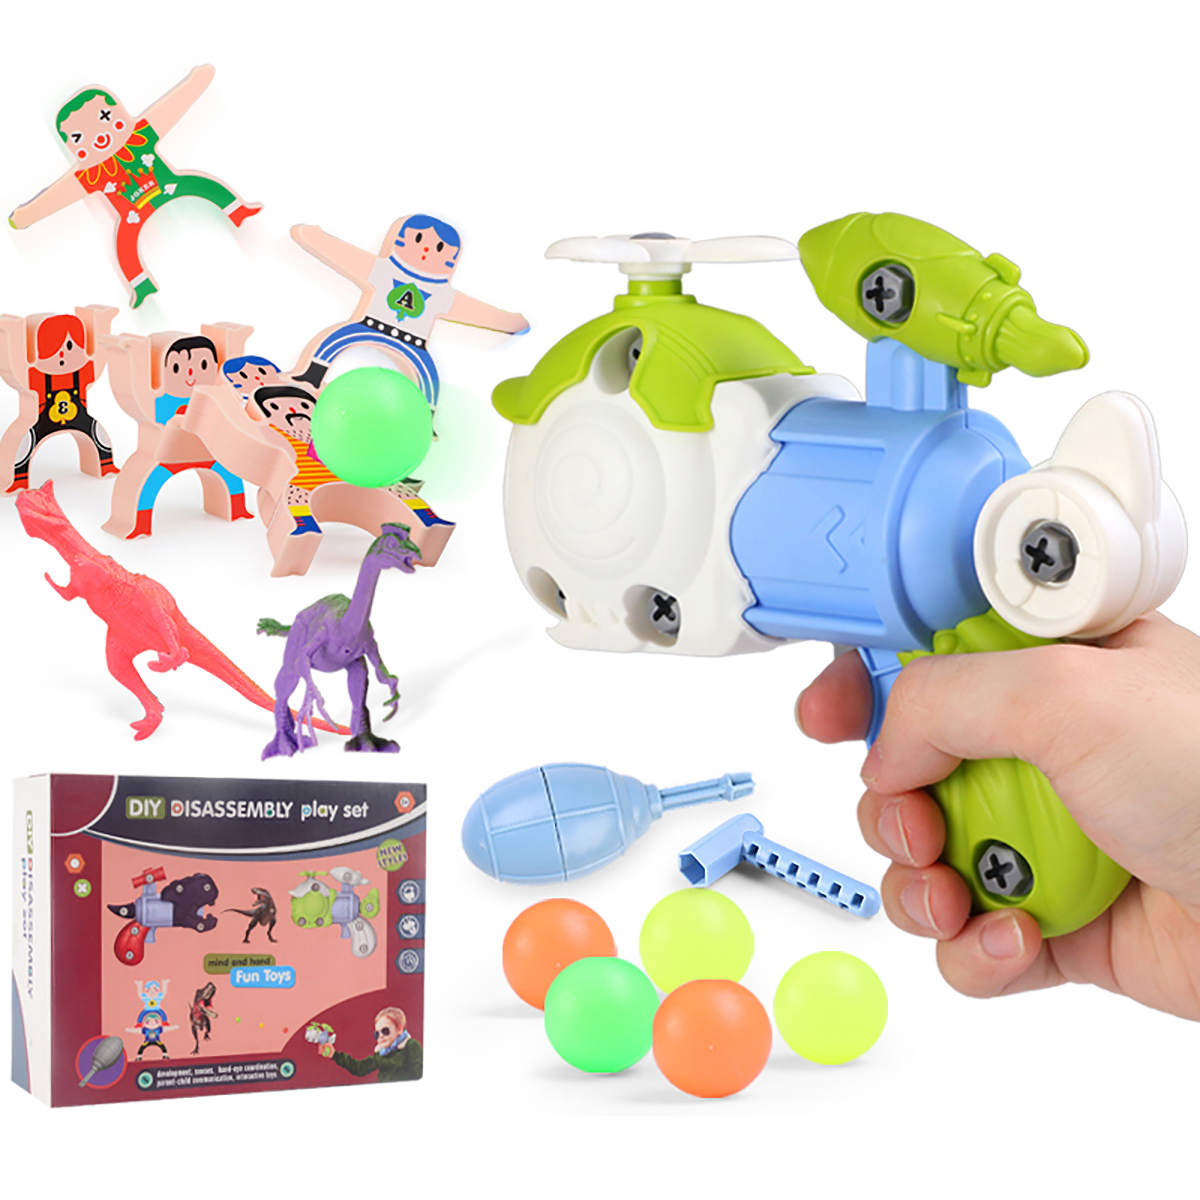 DIY-Disassembly-DinosaurAirplane-Guns-Play-Set-Model-Blocks-Assemble-Educational-Toy-for-Kids-Gift-1829732-4